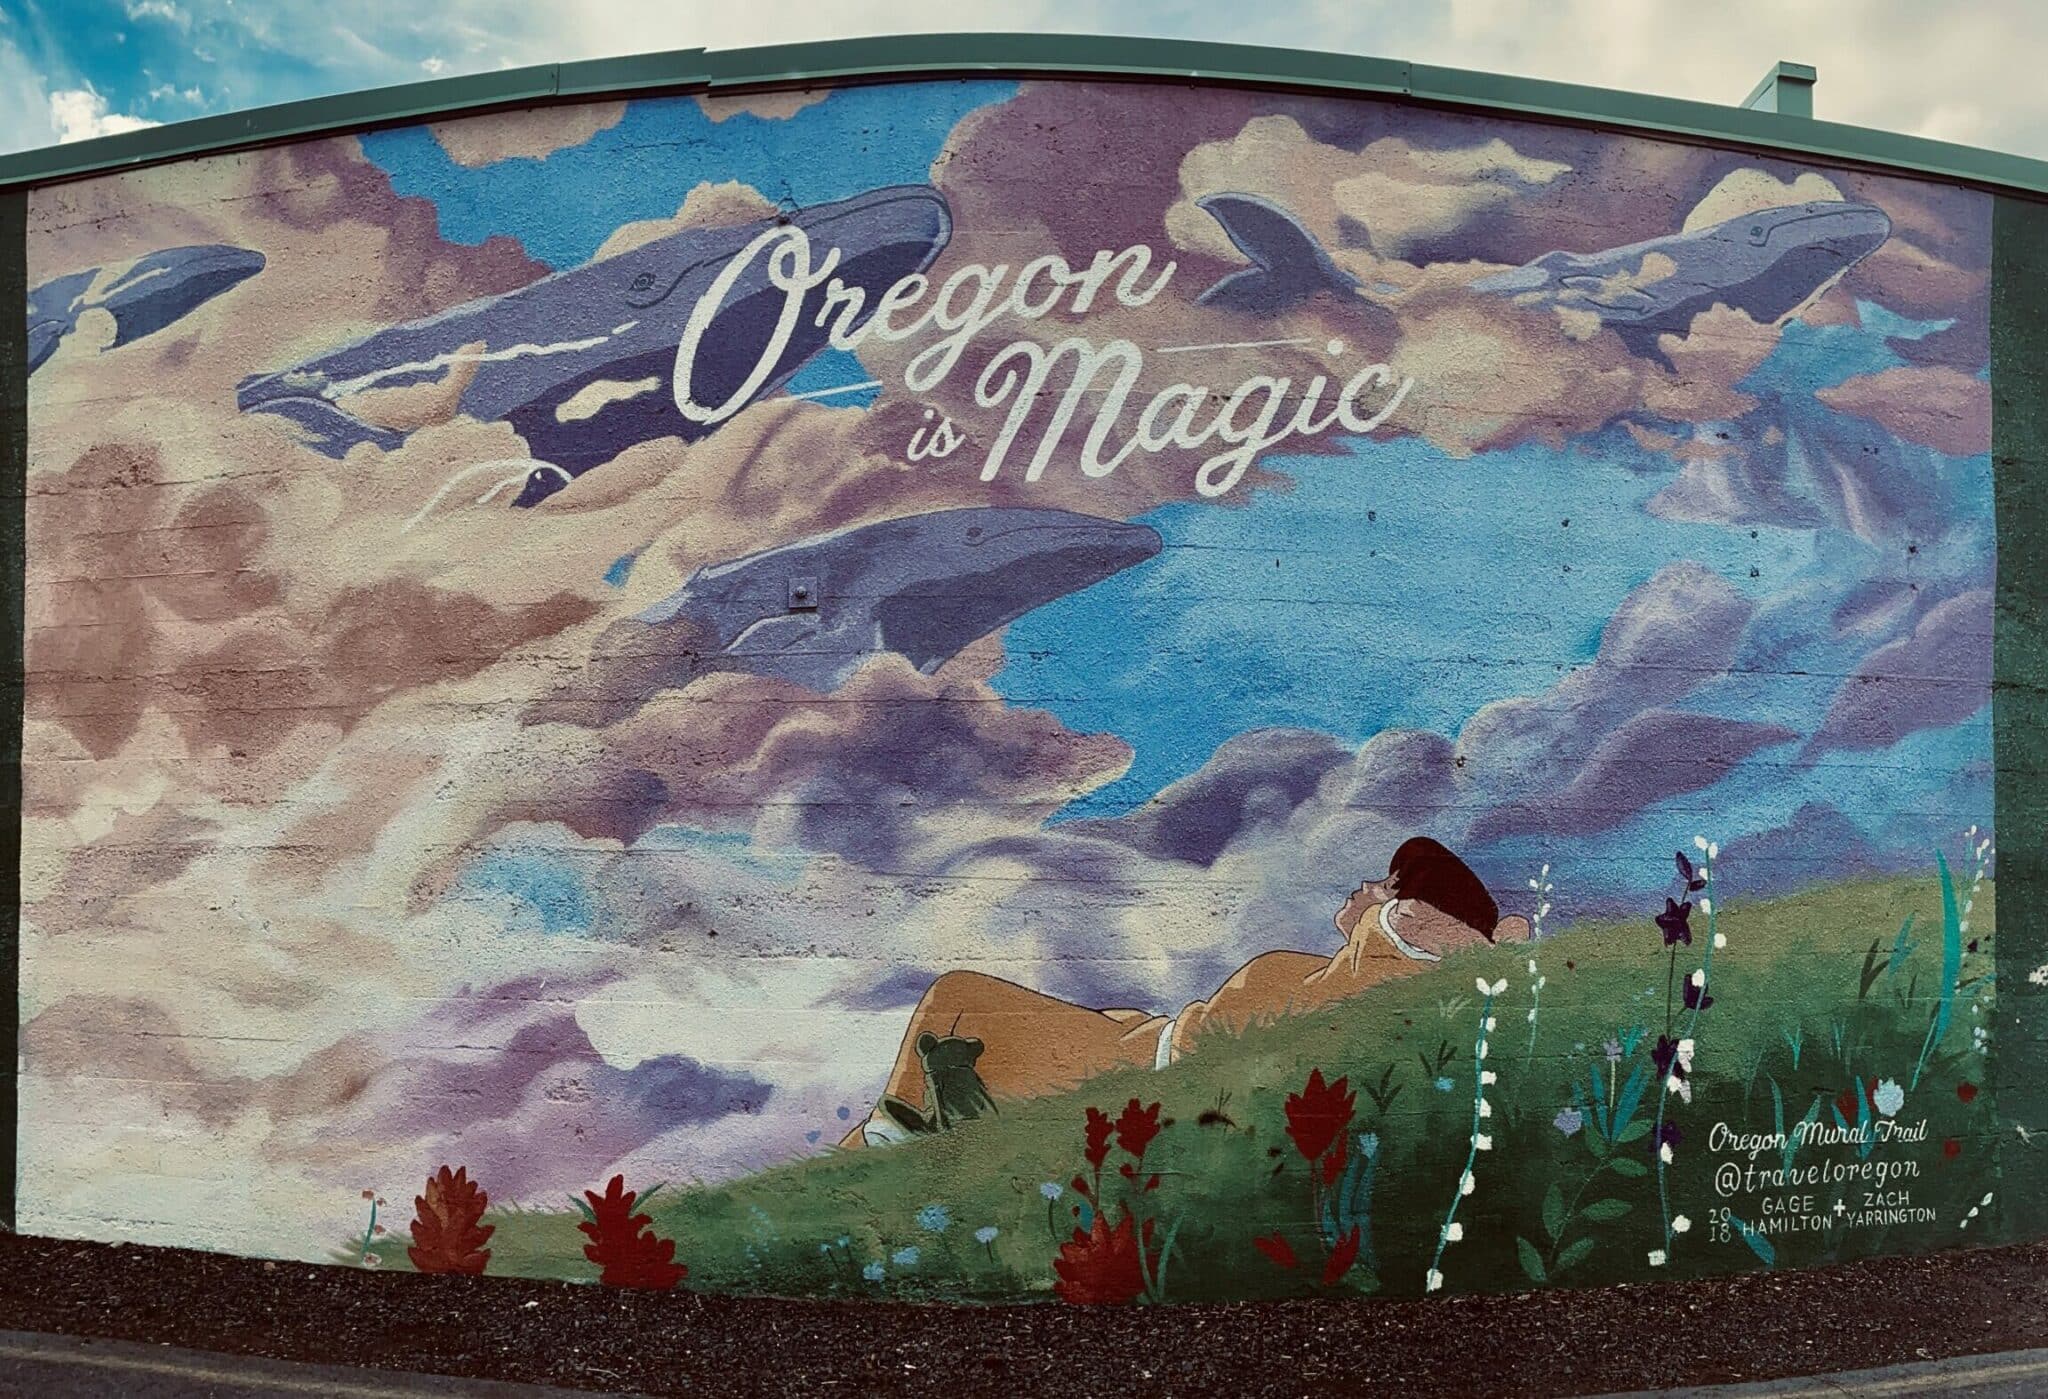 Prineville is Magic Oregon is Magic mural